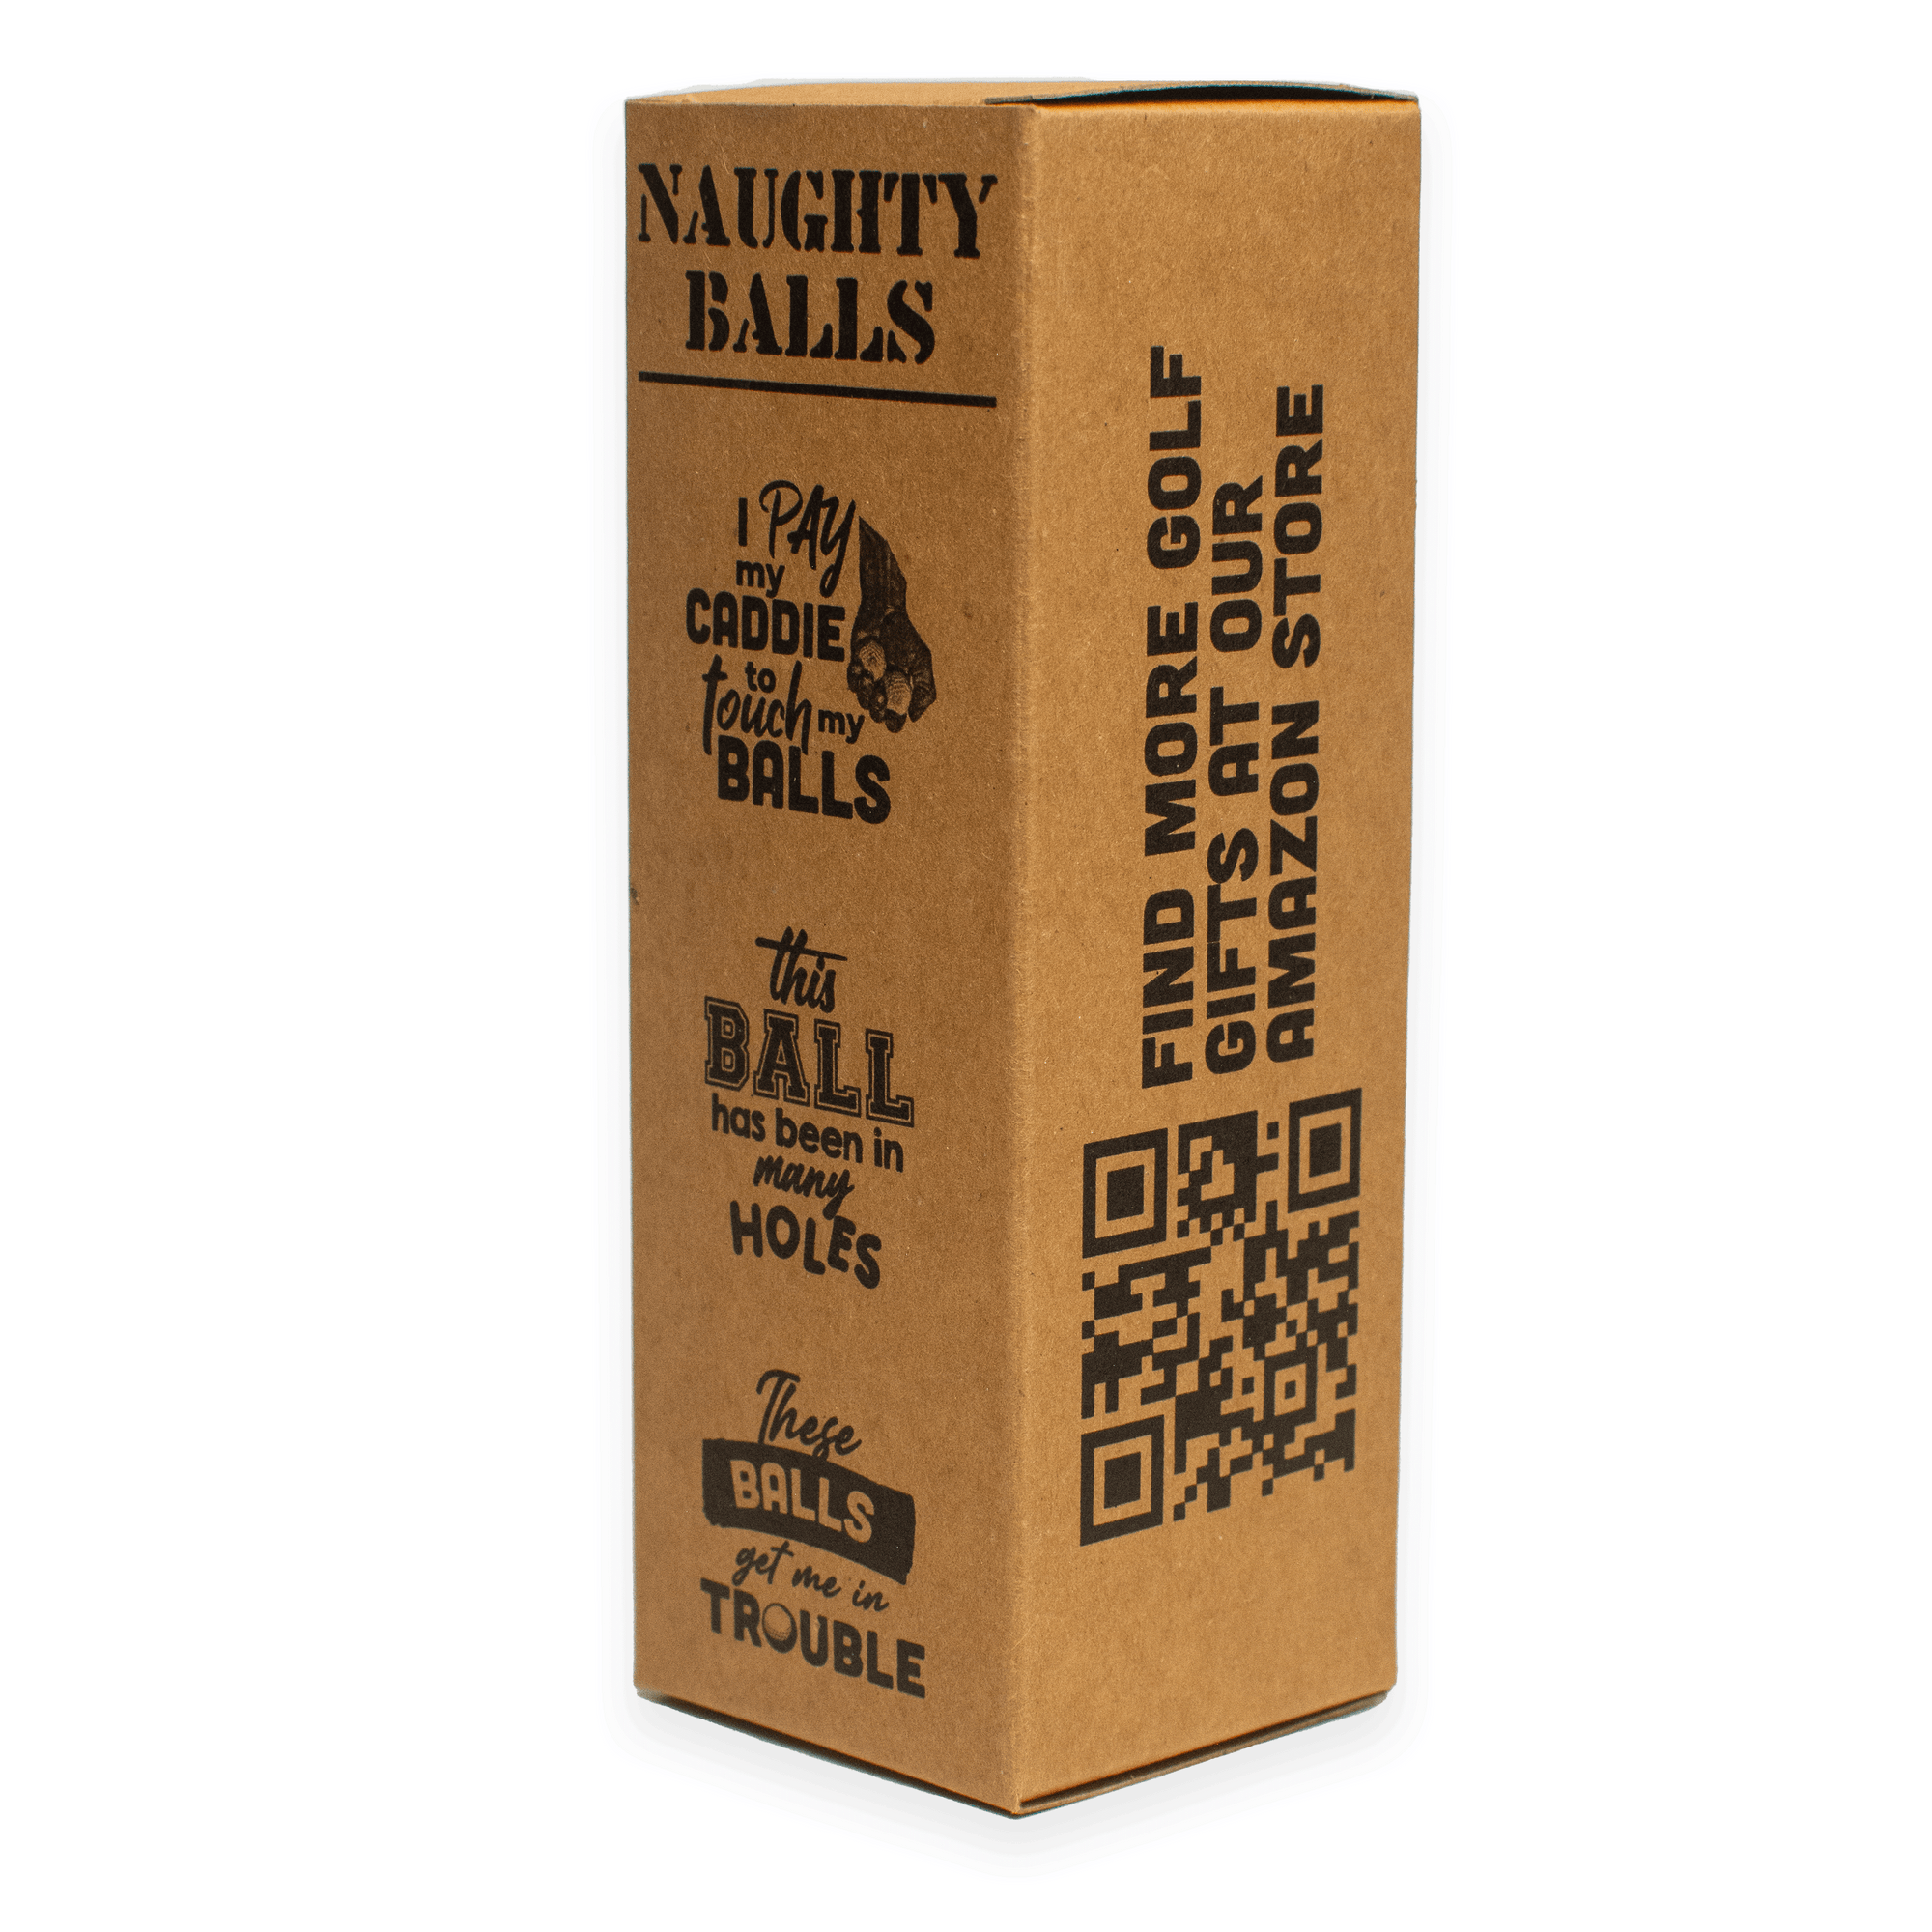 Naughty Balls, Golf Jokes Printed on Golf Balls, Egg Carton Packaging